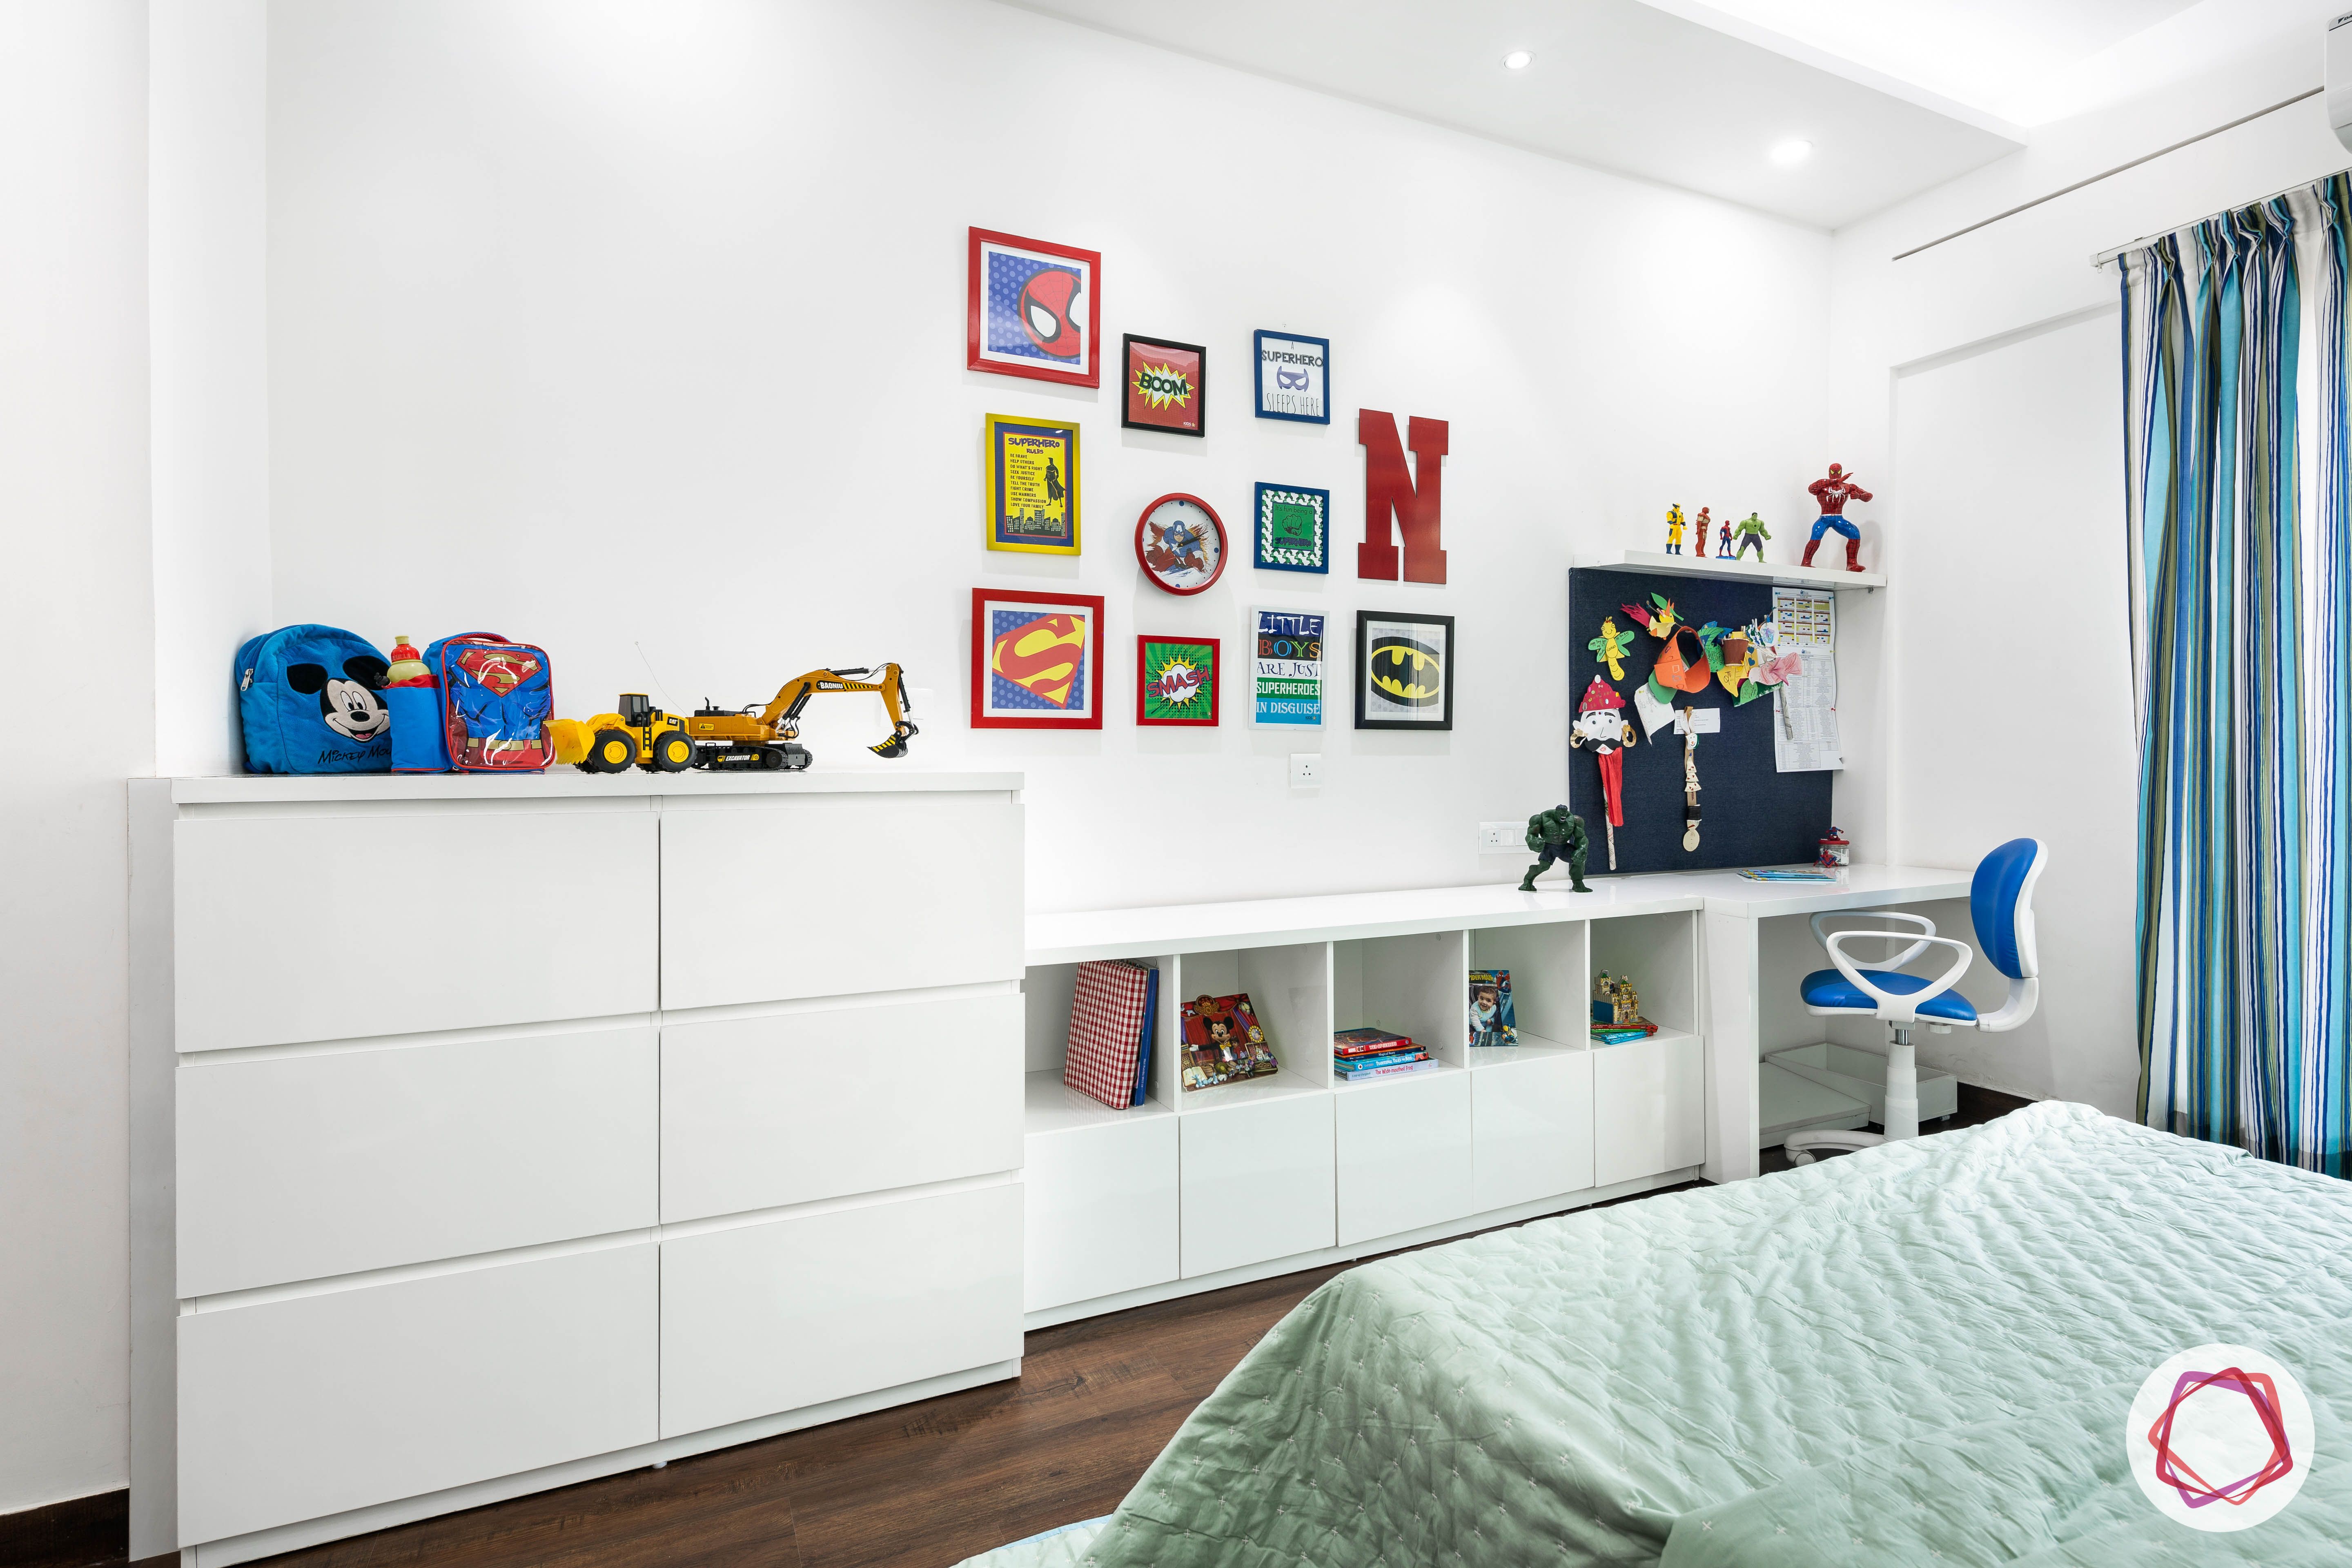 duplex house design kids bedroom cabinets